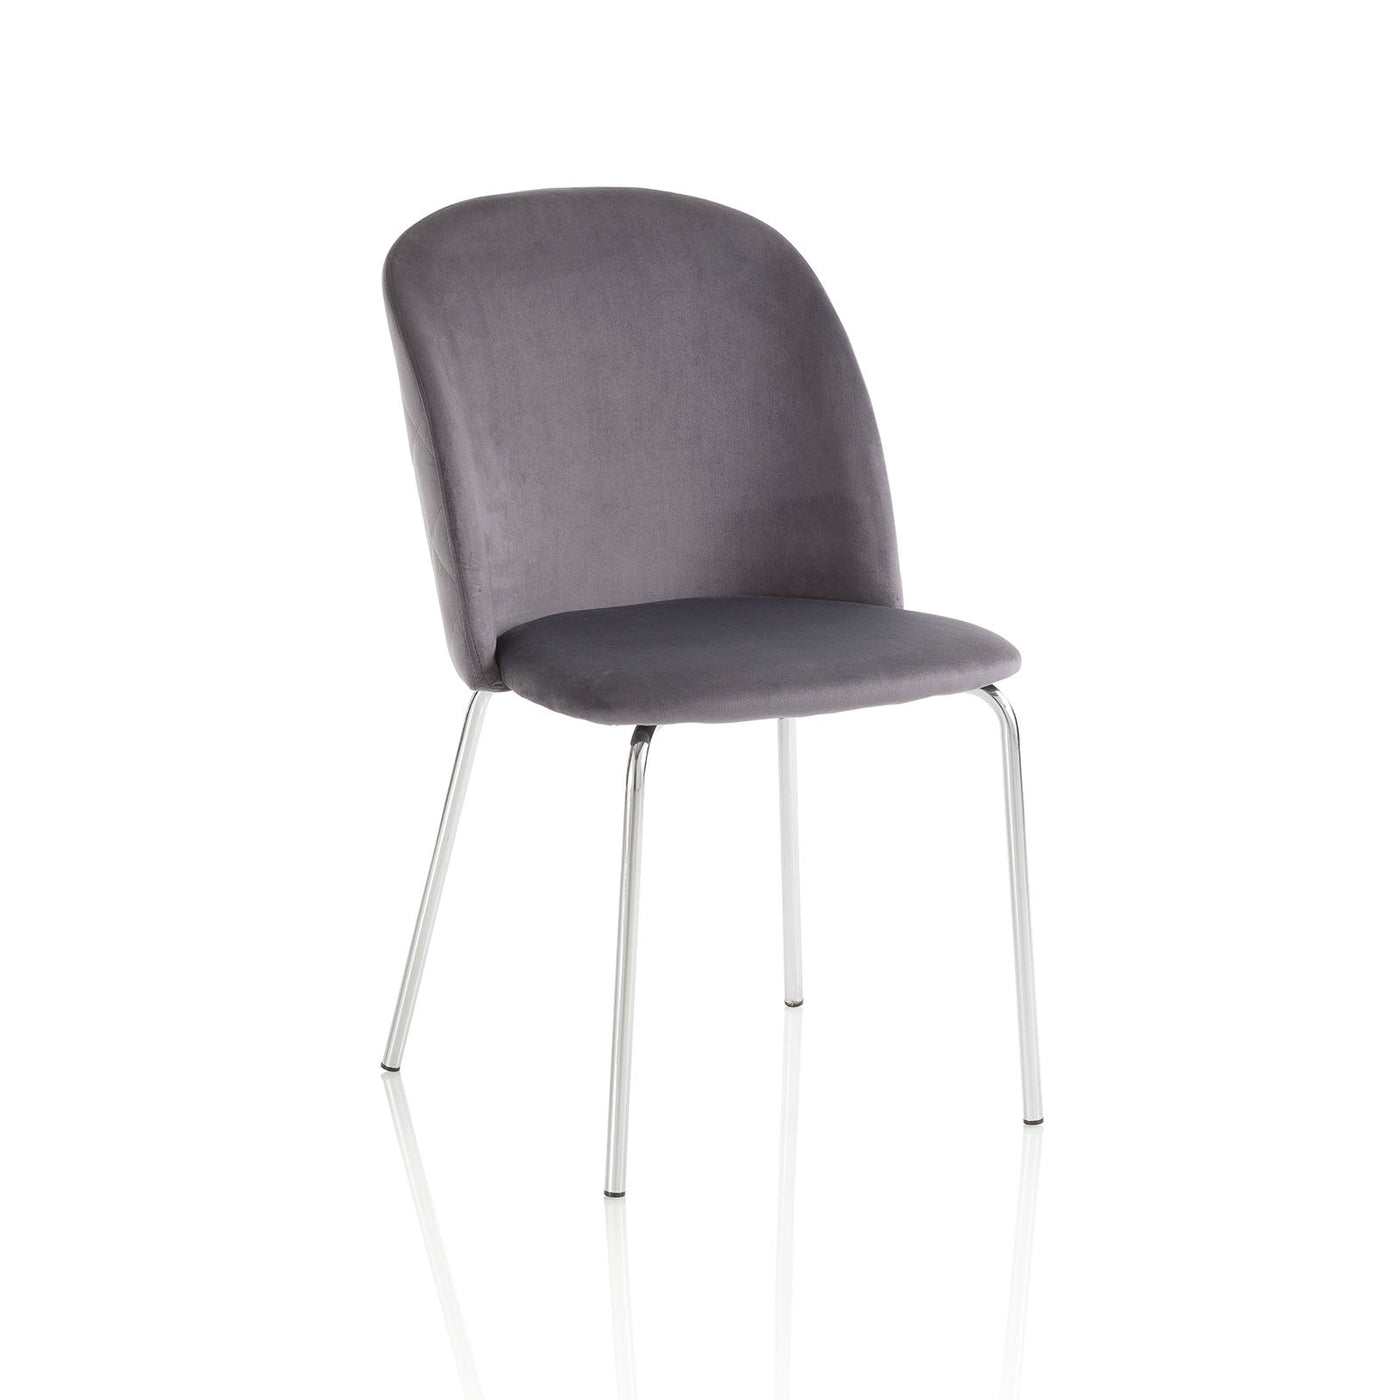 Set of 2 gray JOY chairs